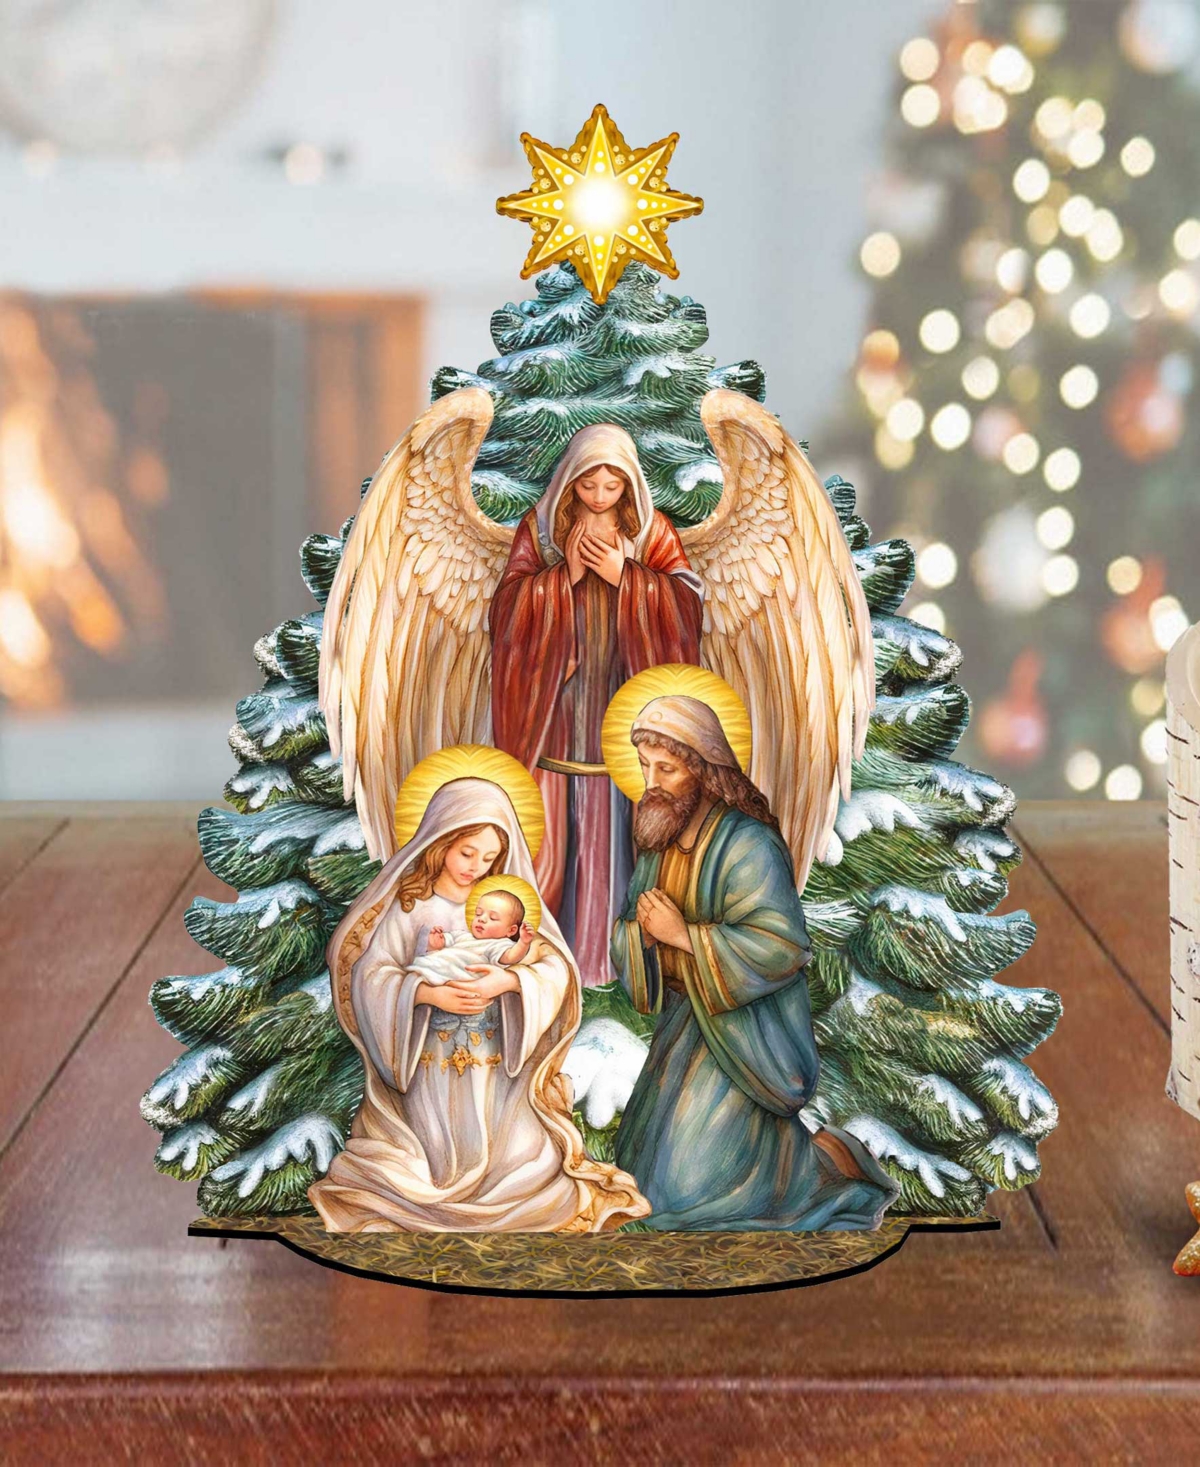 Designocracy Nativity Scene With Christmas Tree Holiday Village 7" Table Decoration G.debrekht In Multi Color